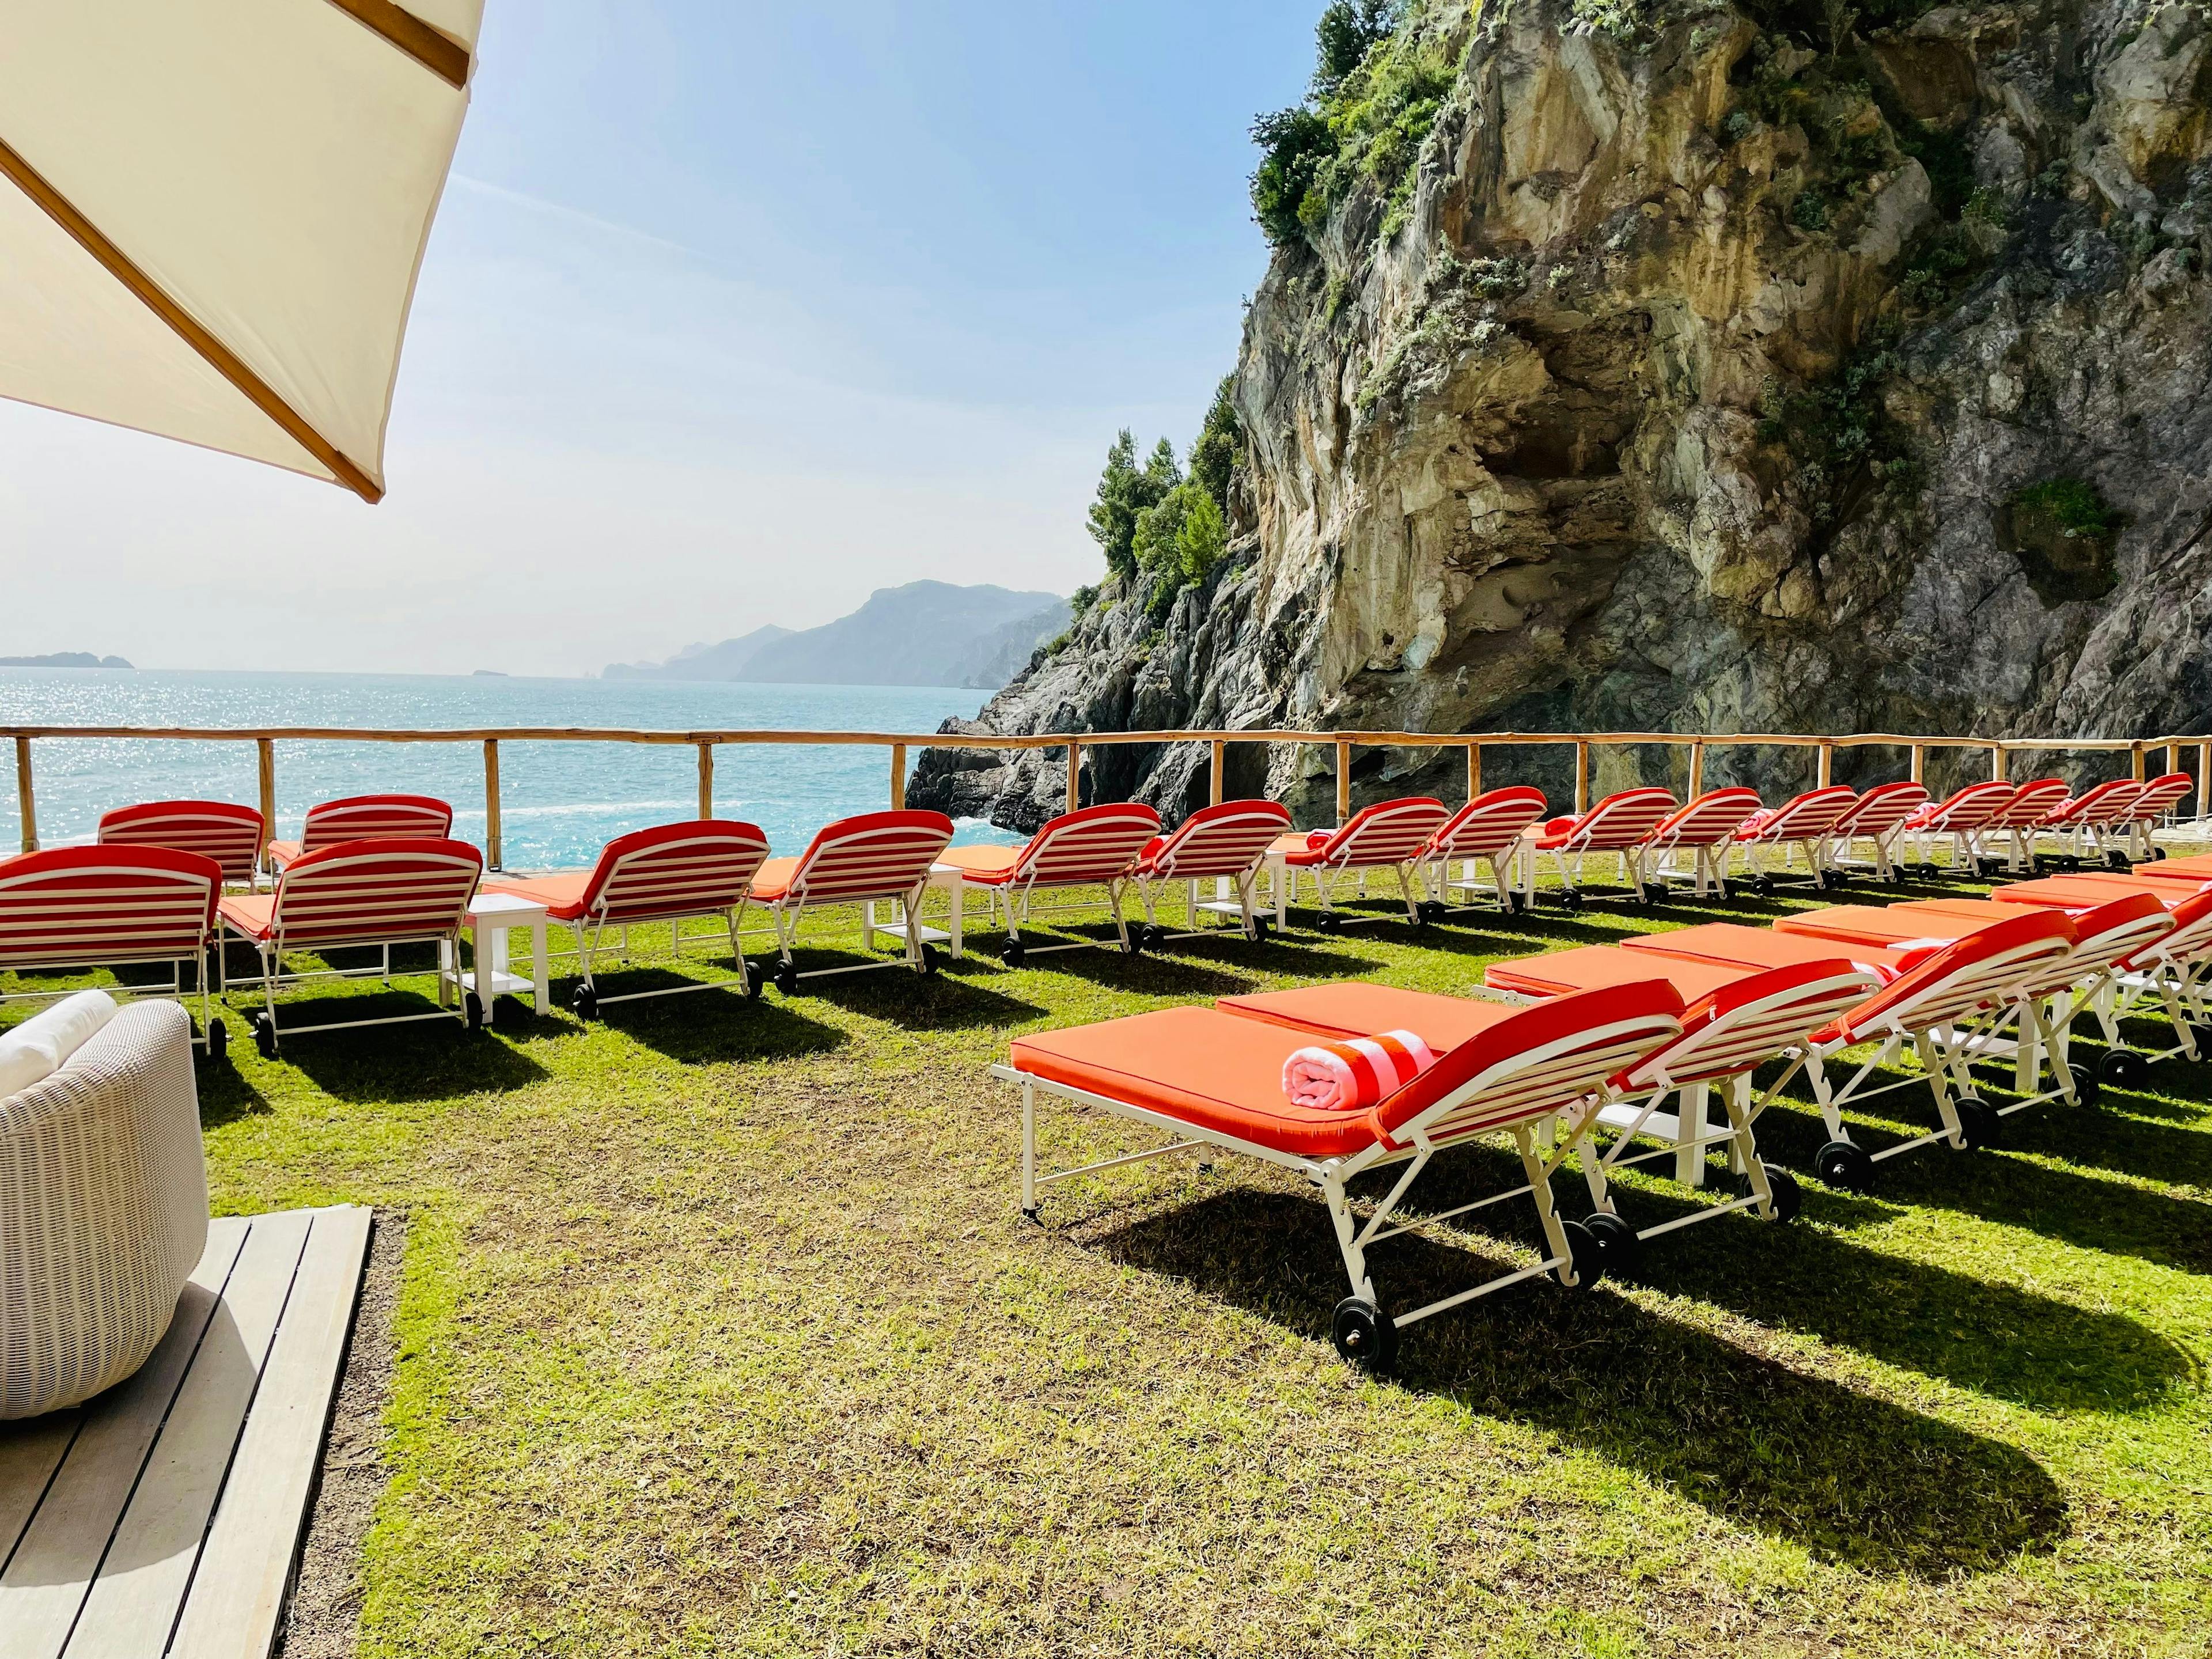 Cliffside bathing area at Il San Pietro di Positano on the Amalfi Coast.